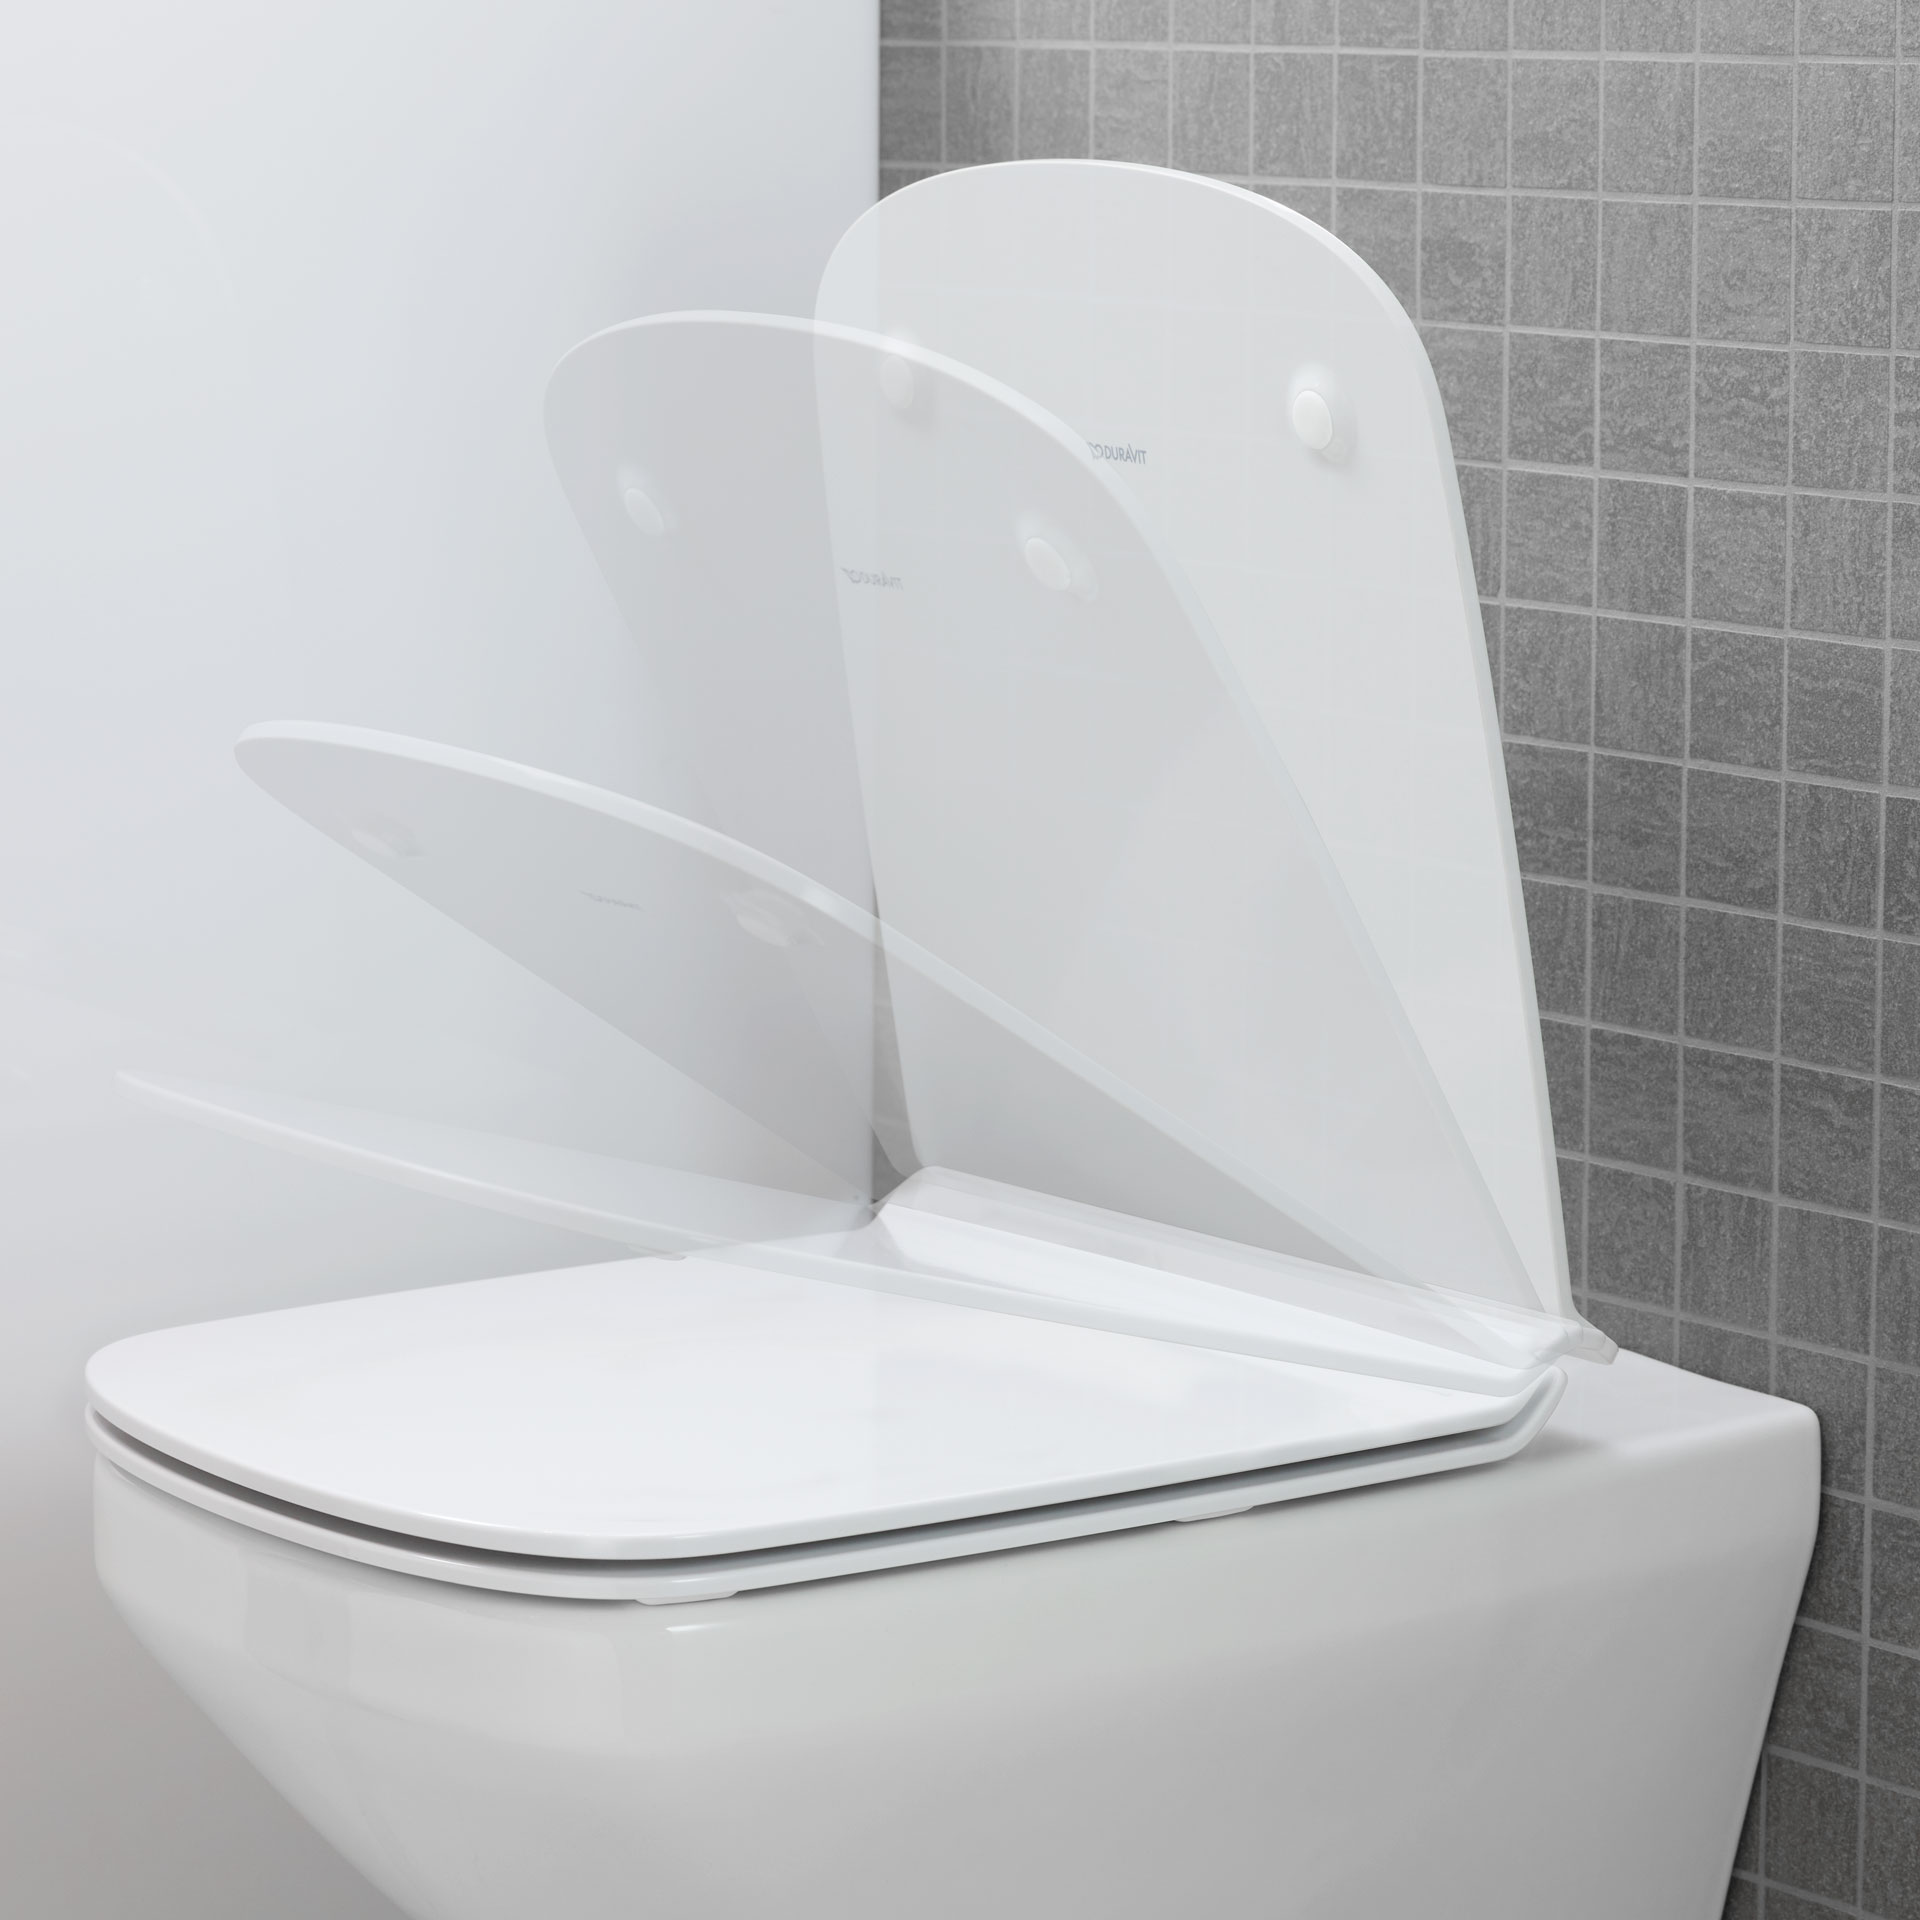 DuraStyle plastic toilet seat
